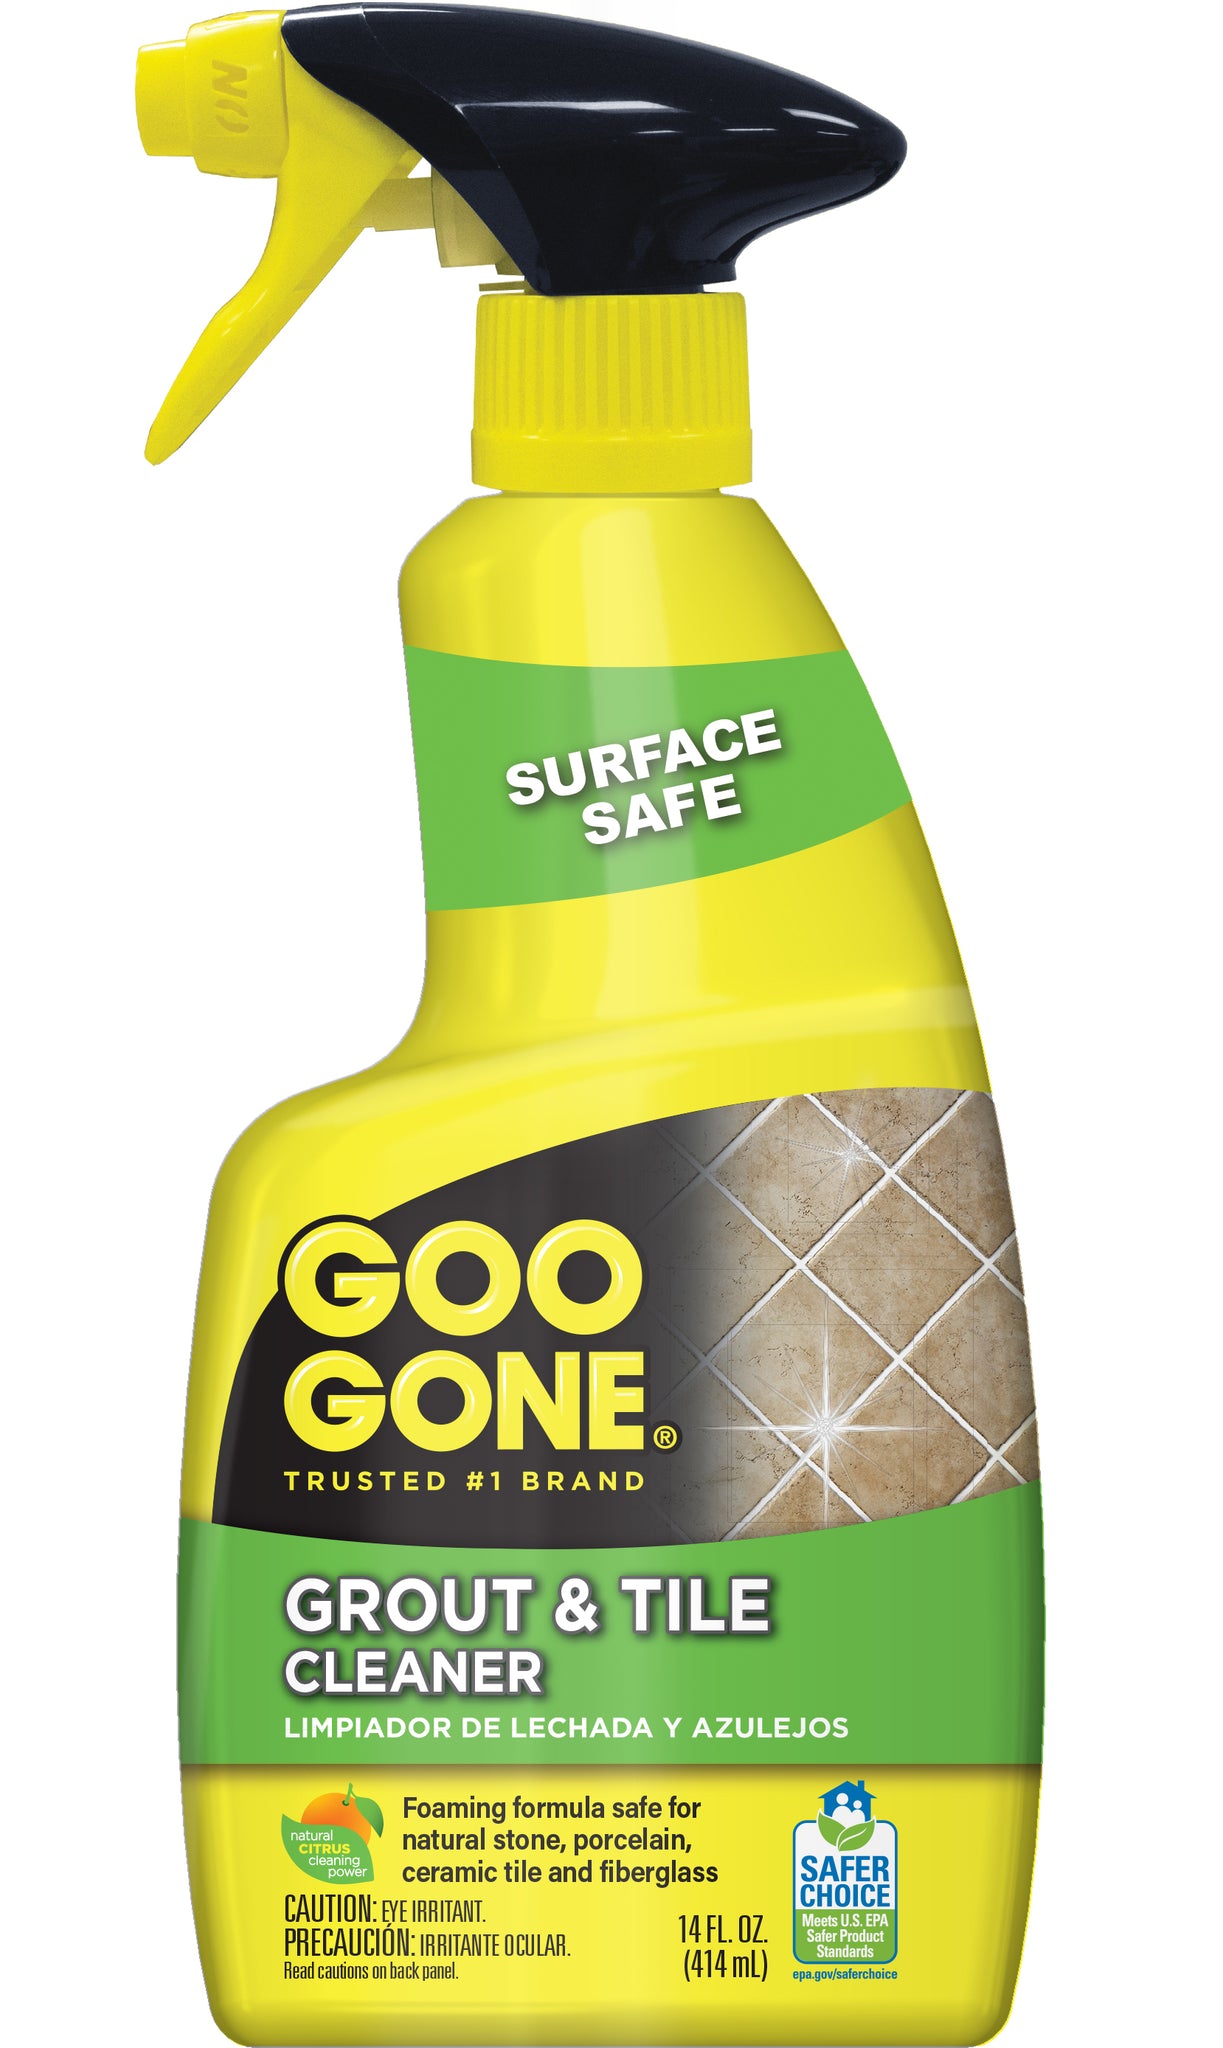 GOO GONE GROUT & TILE CLEANER USA SAFER CHOICE BACKED NON - HAZARDOUS  14oz/414ml